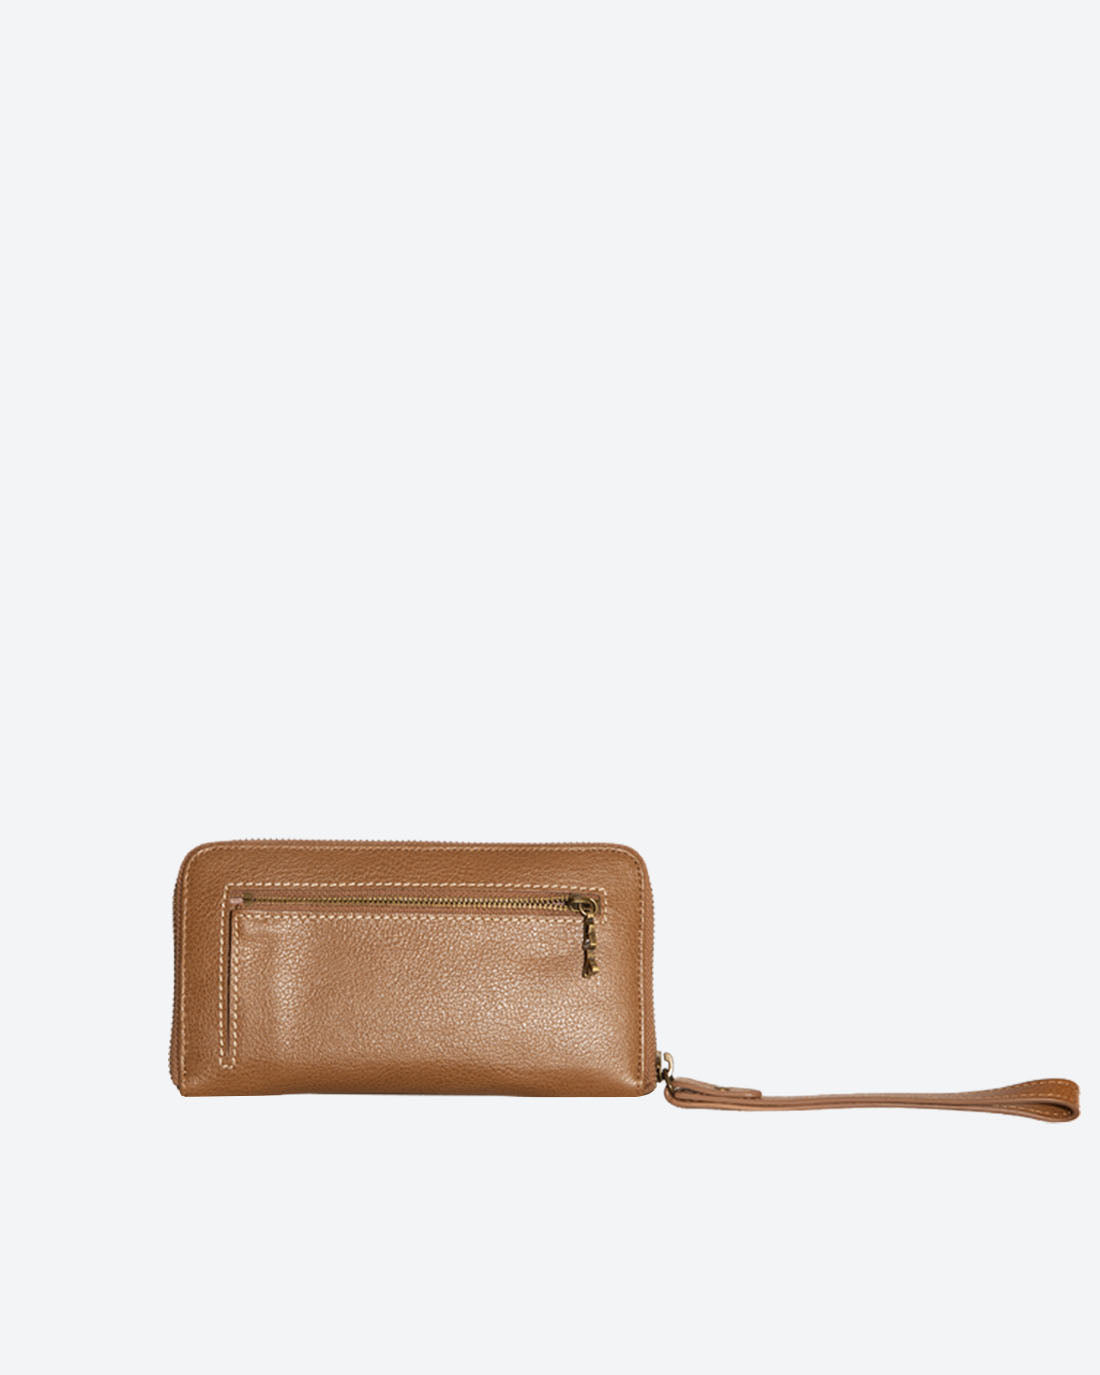  Amosfun Leather Wallet Strap Handbag Pu Leather